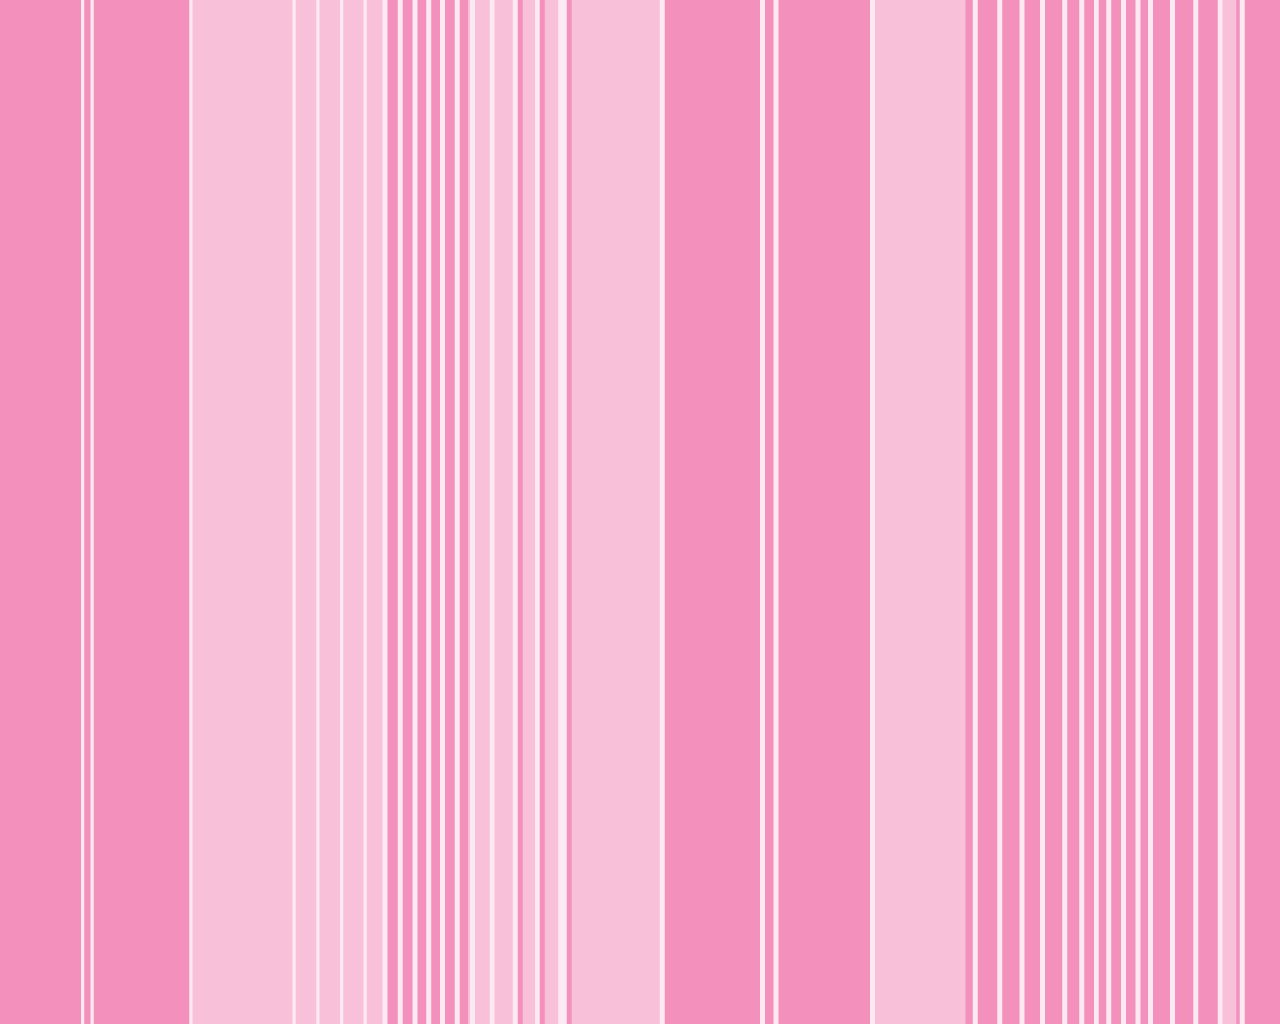 Hd Pink Wallpaper Download